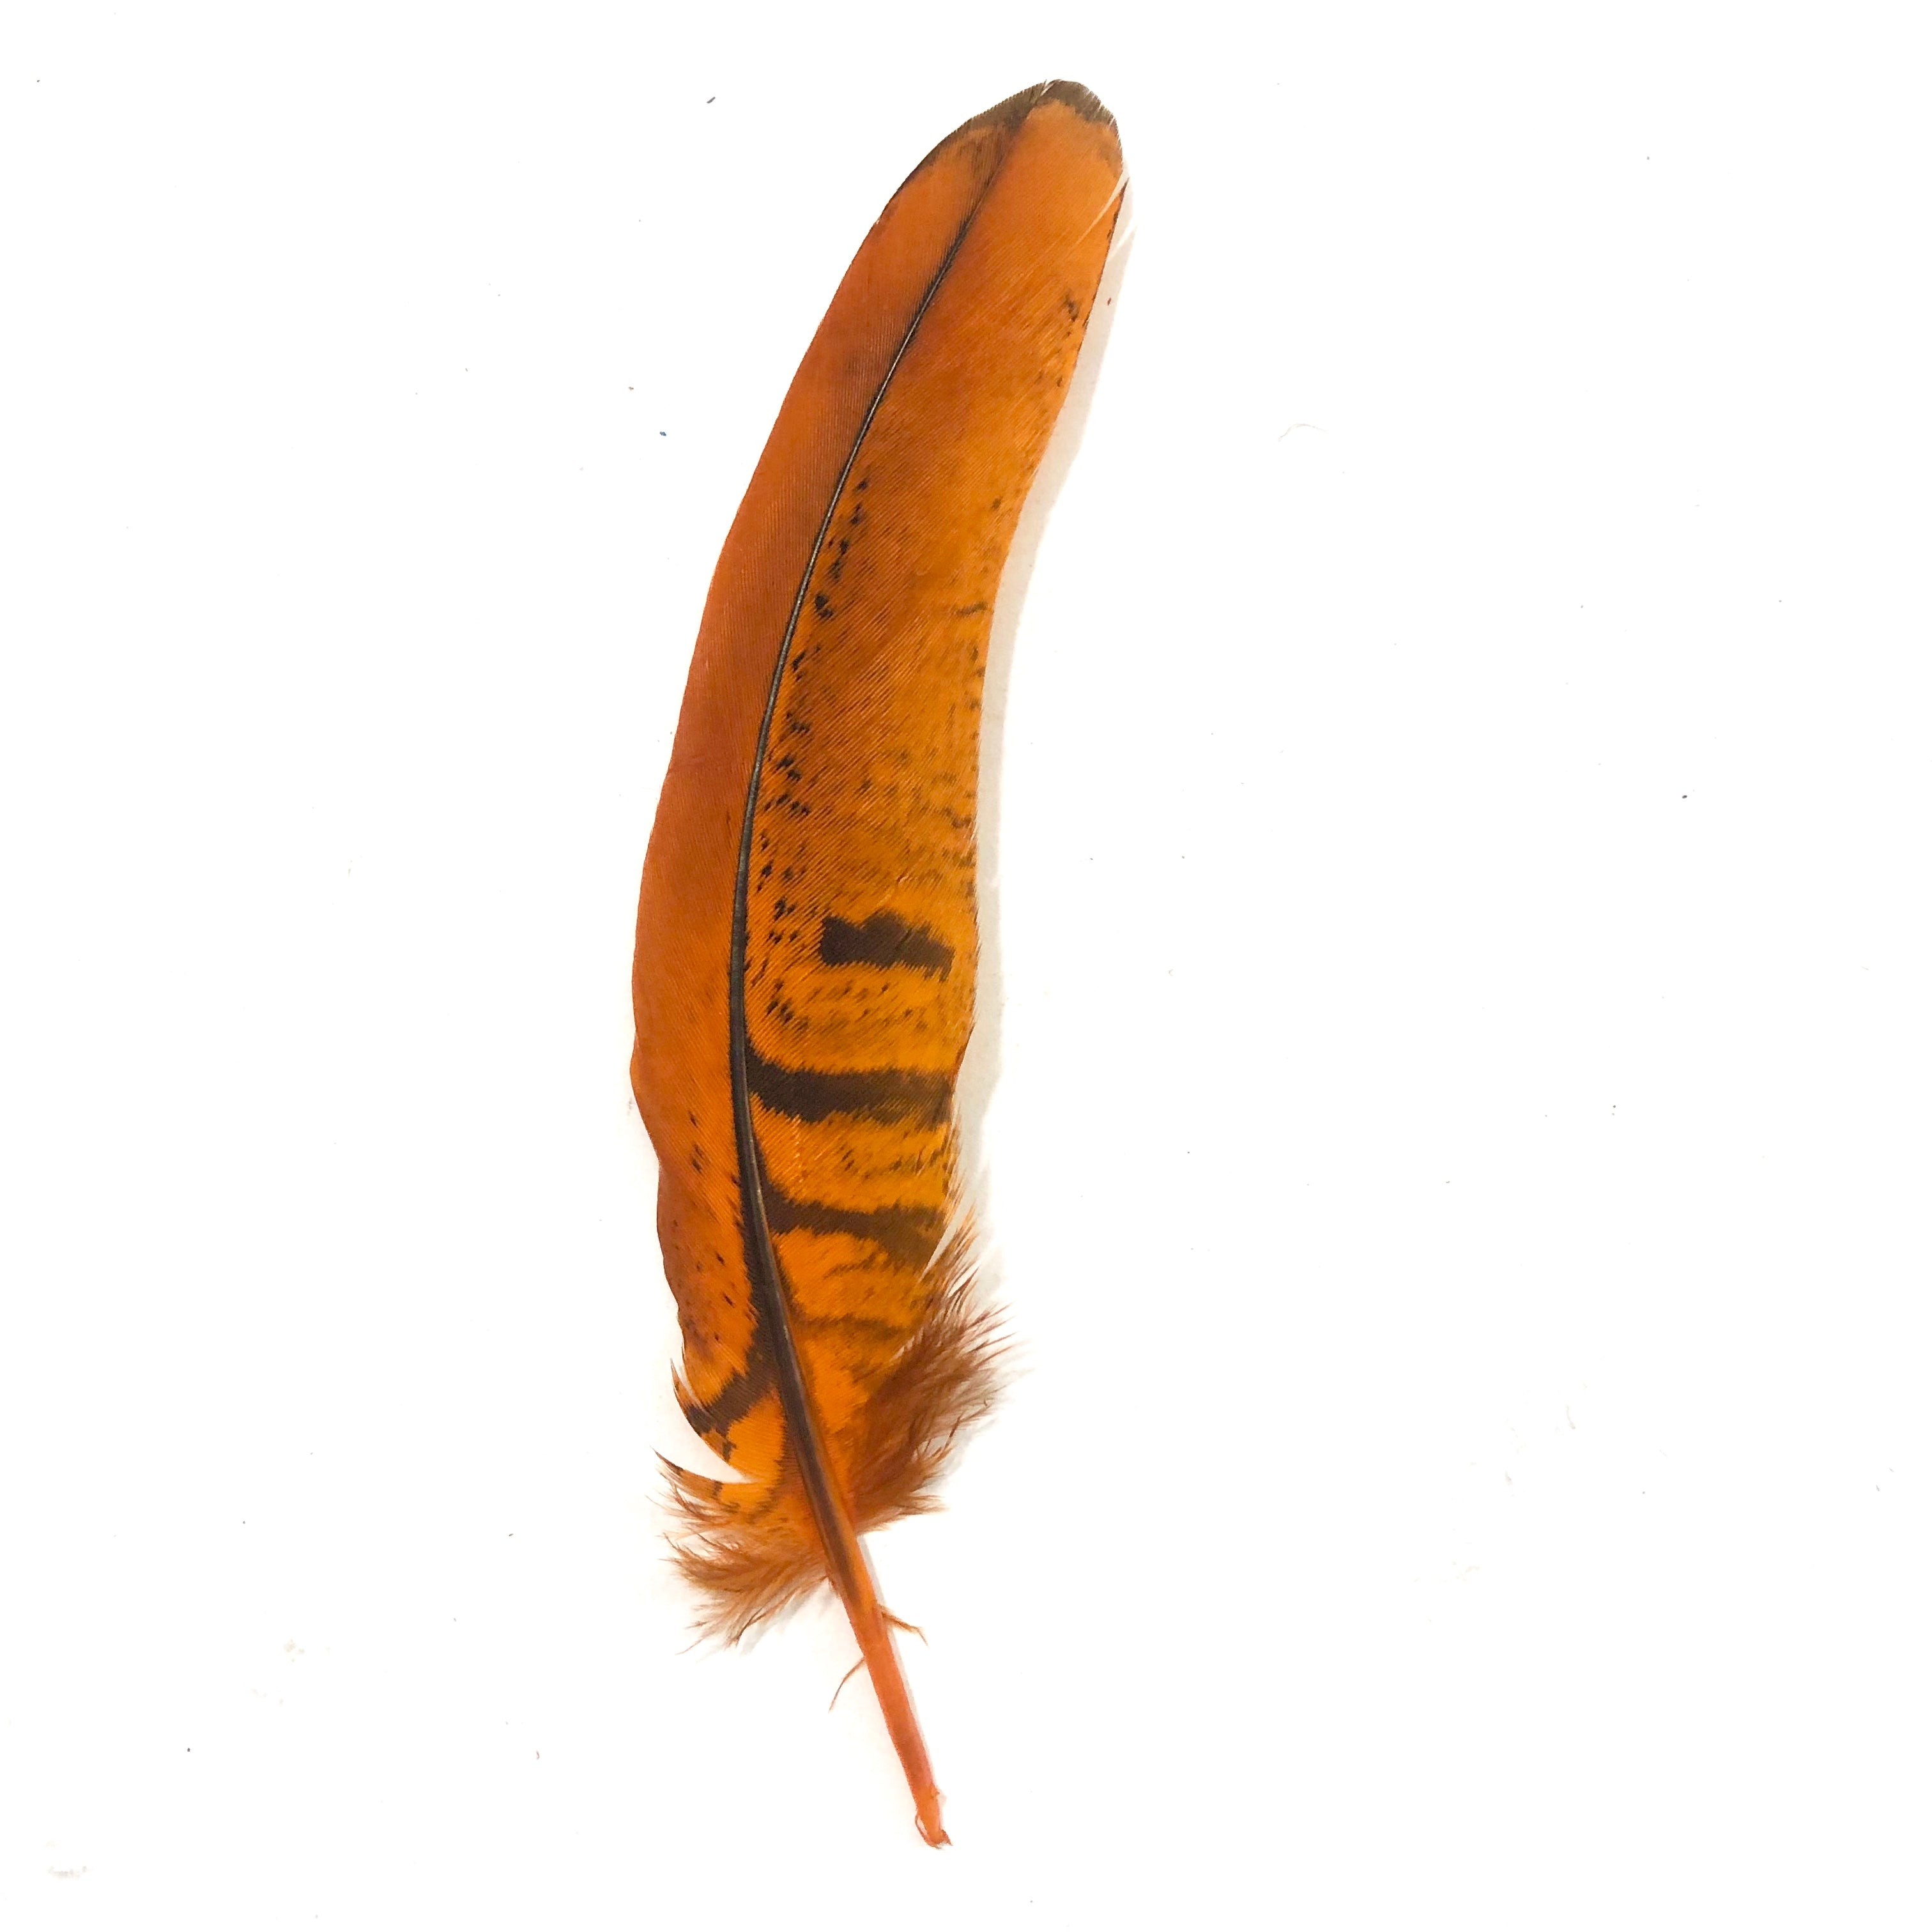 Under 6" Reeves Pheasant Tail Feather x 10 pcs - Orange